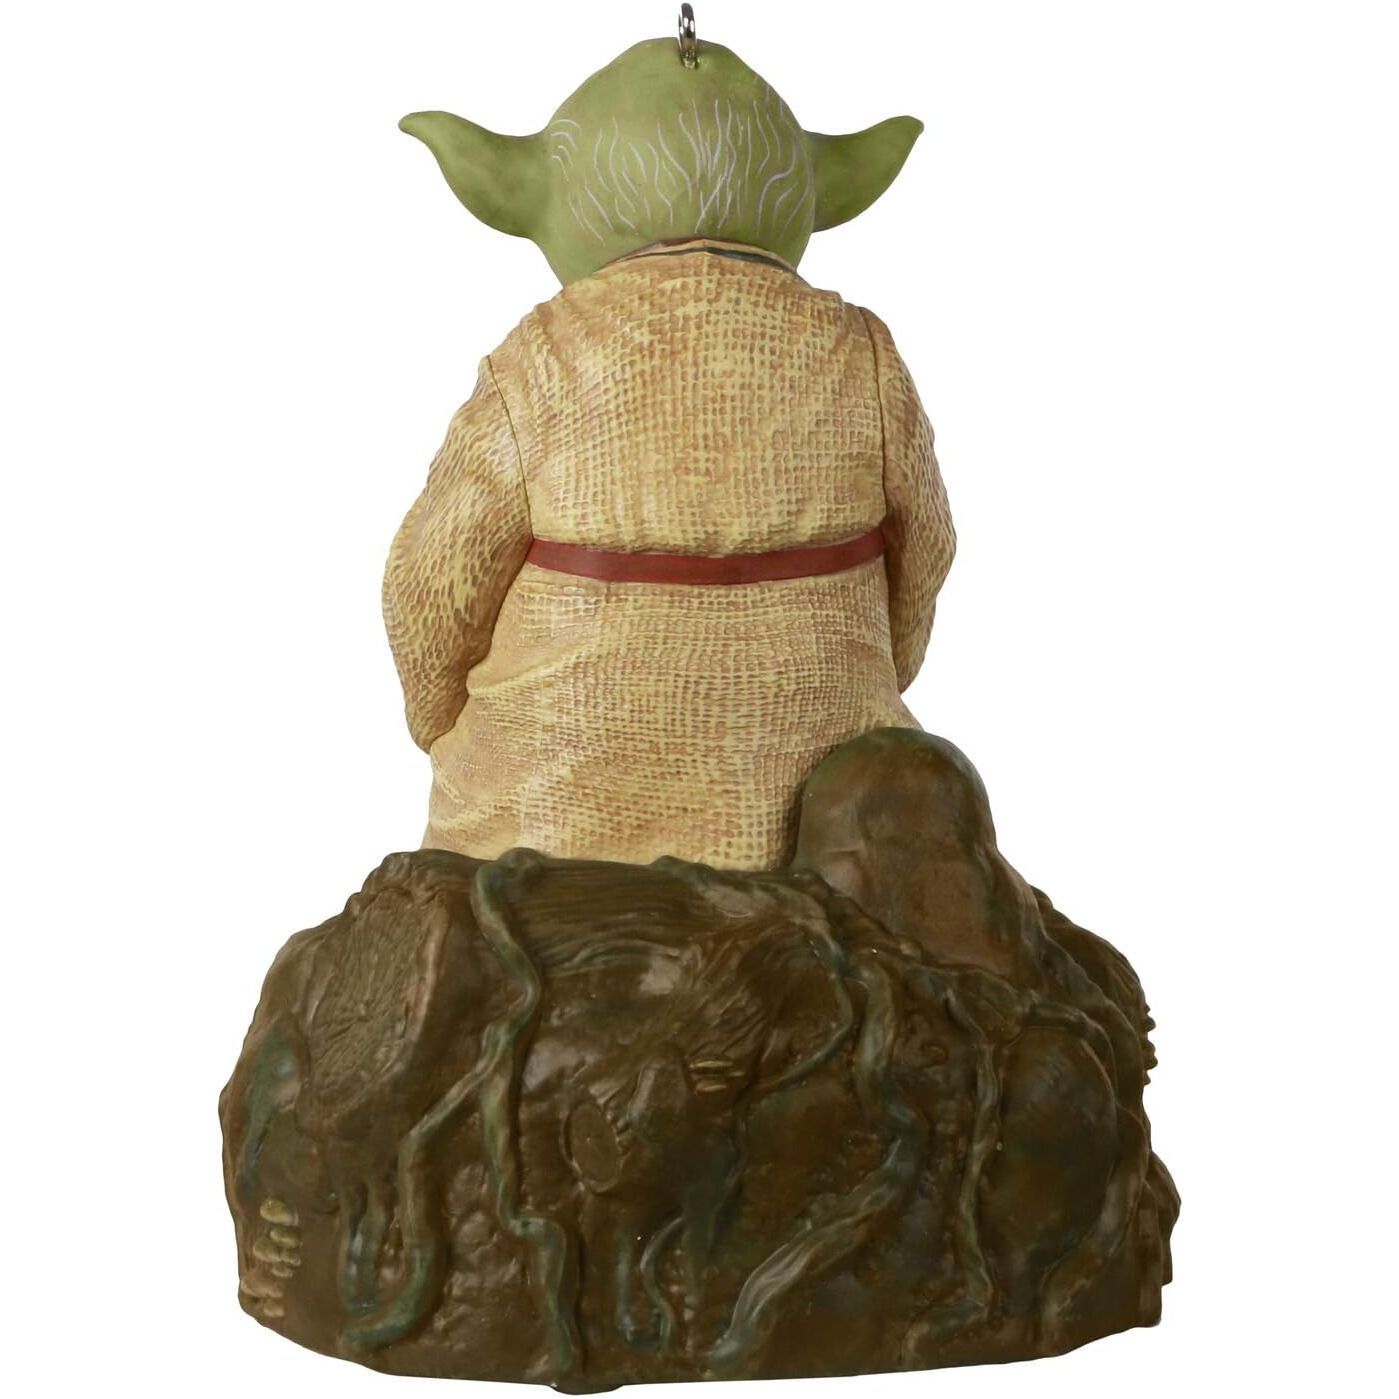 Star Wars: The Empire Strikes Back Jedi Master Yoda, 2020 Keepsake Ornament